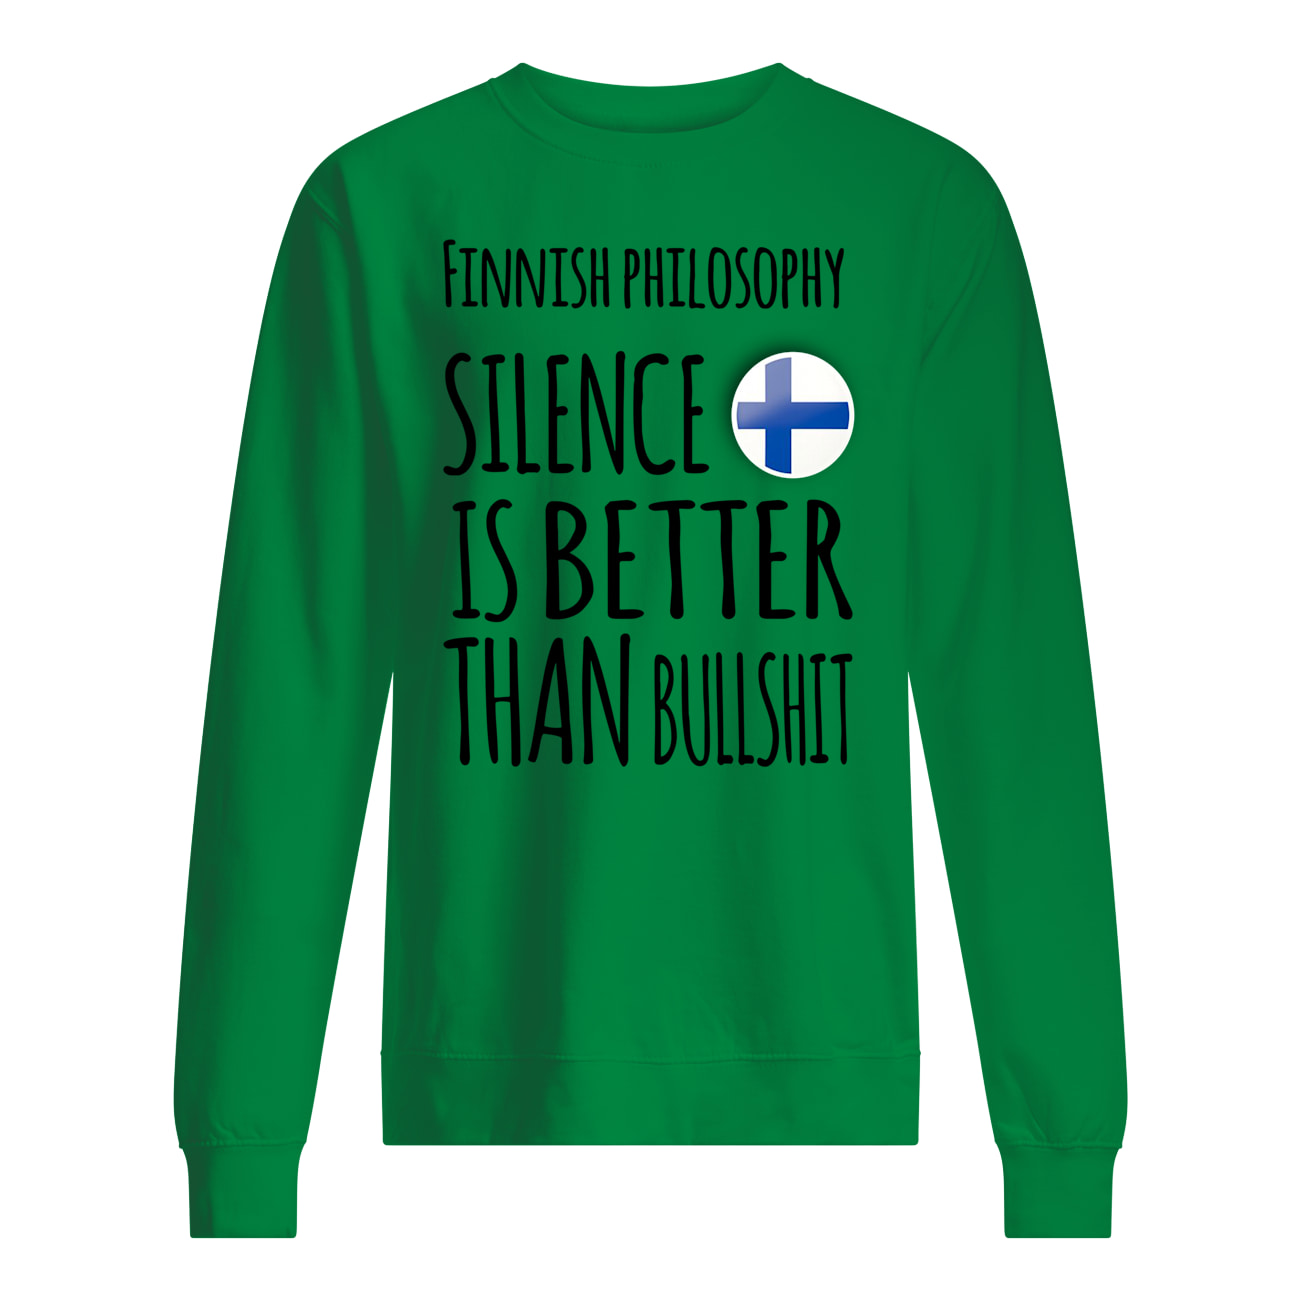 Finnish philosophy silence is better than bullshit sweatshirt